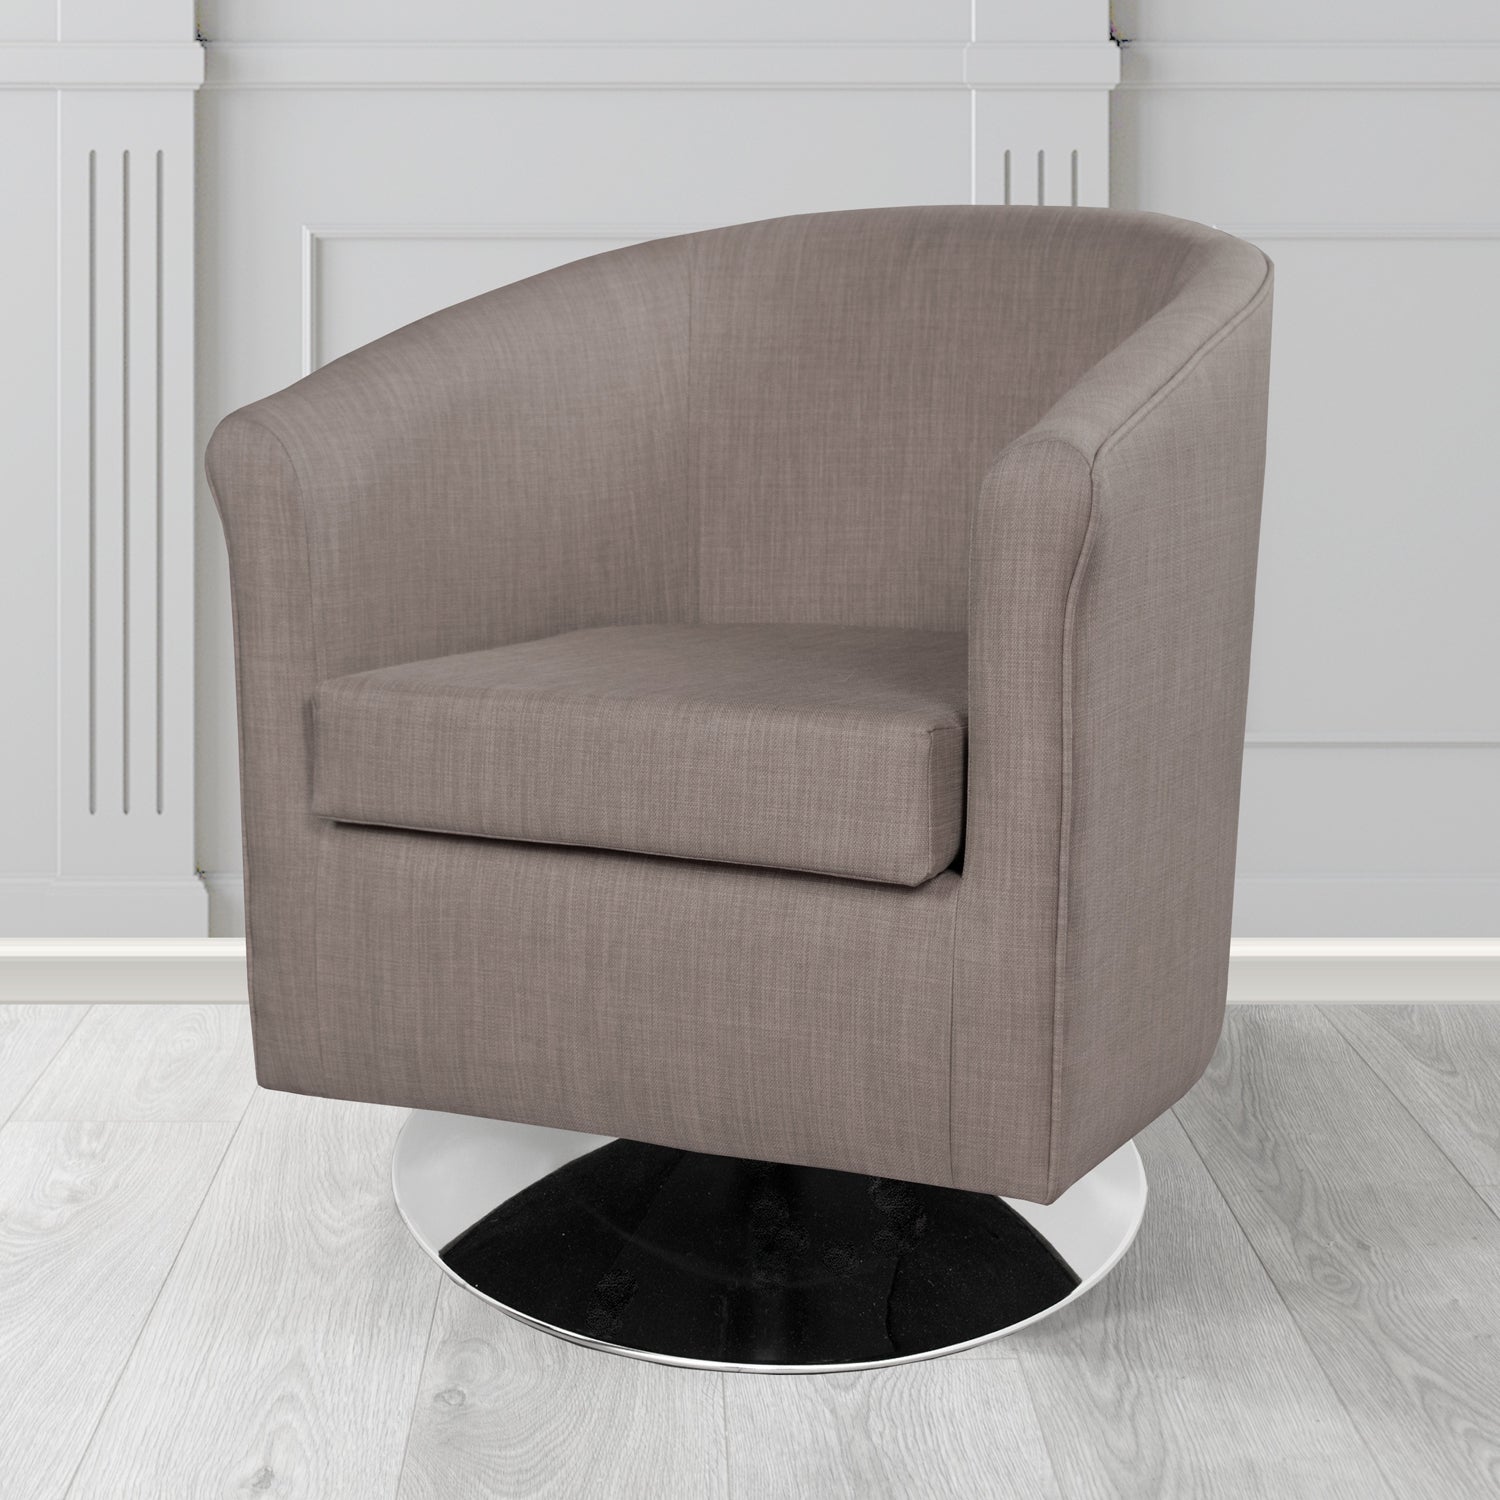 Tuscany Charles Slate Plain Linen Fabric Swivel Tub Chair - The Tub Chair Shop